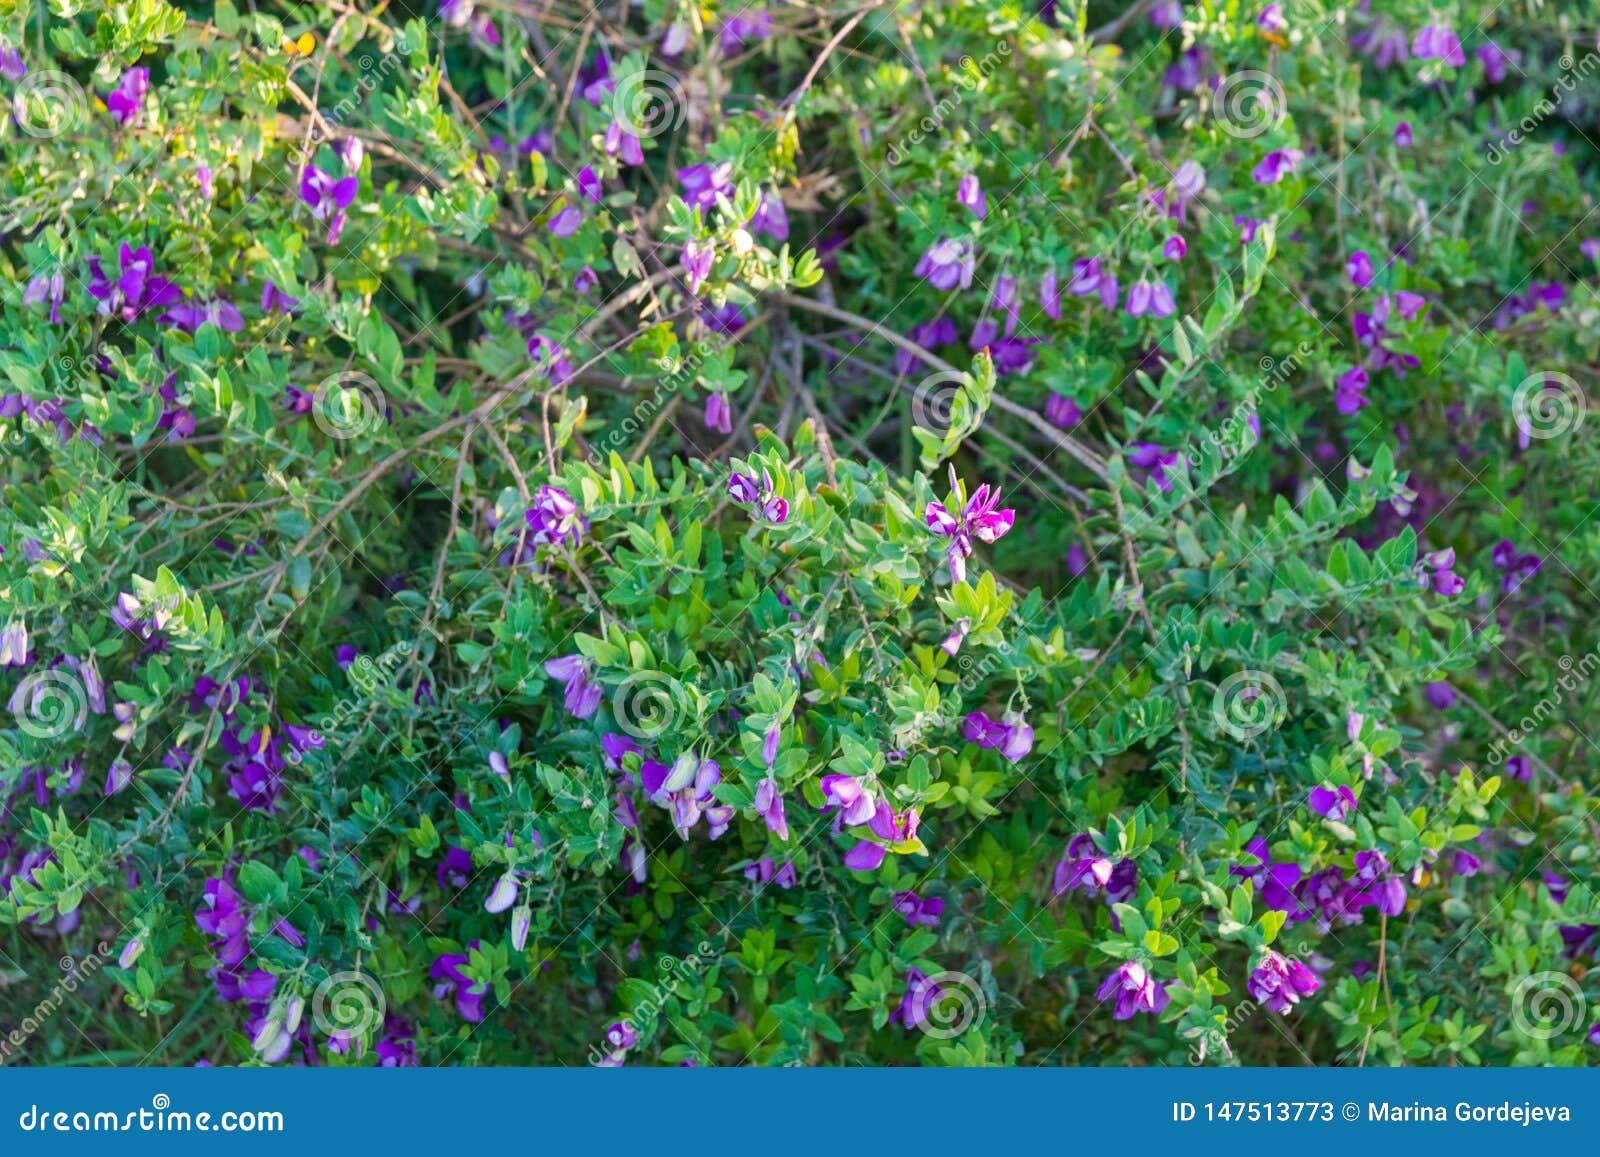 purple flowering bushes